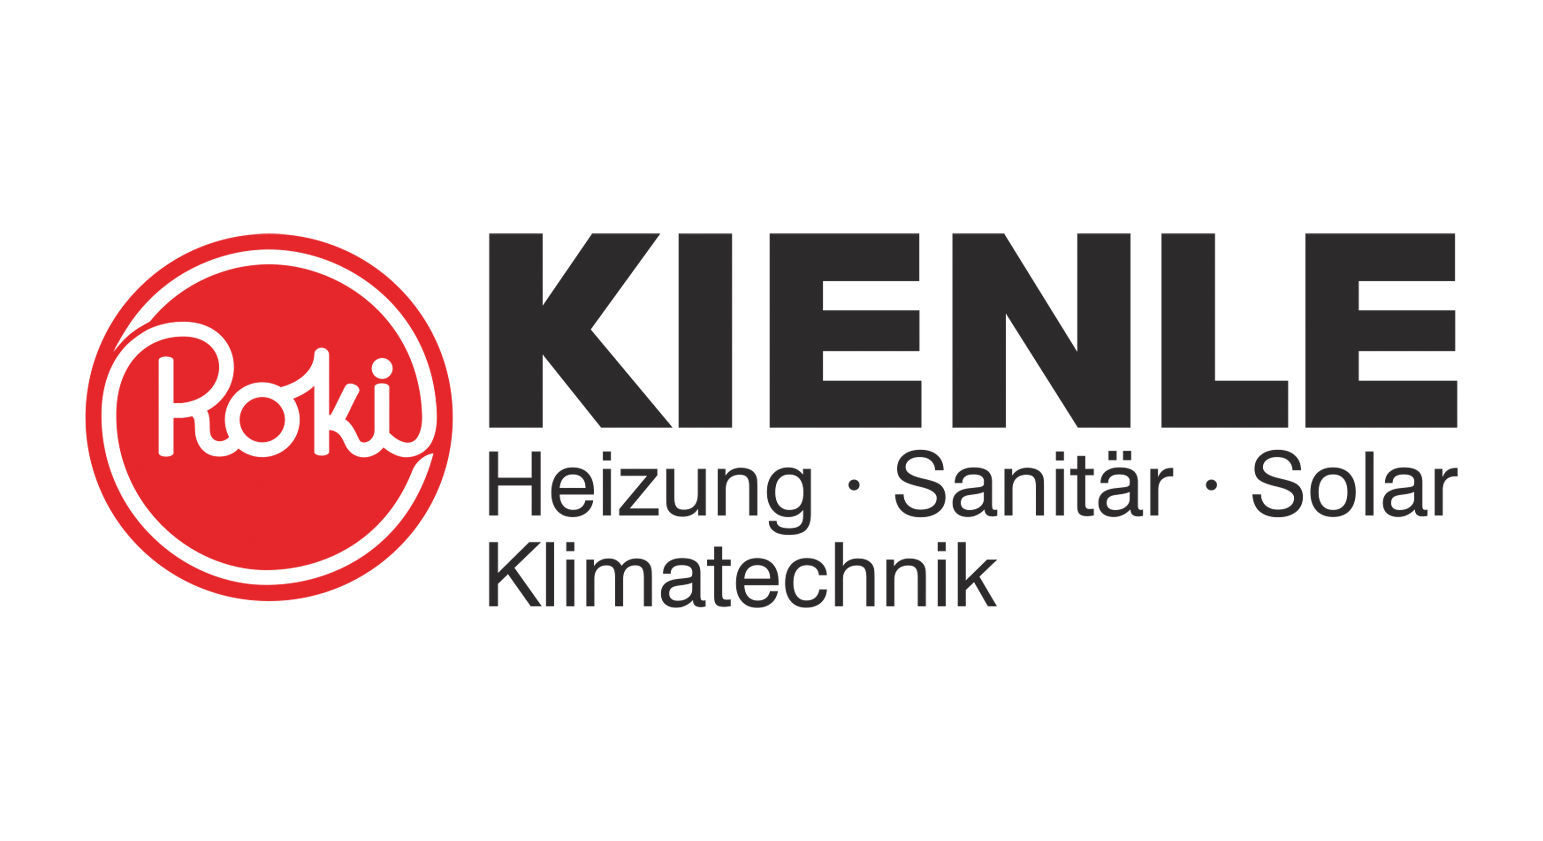 Kienle GmbH Roki